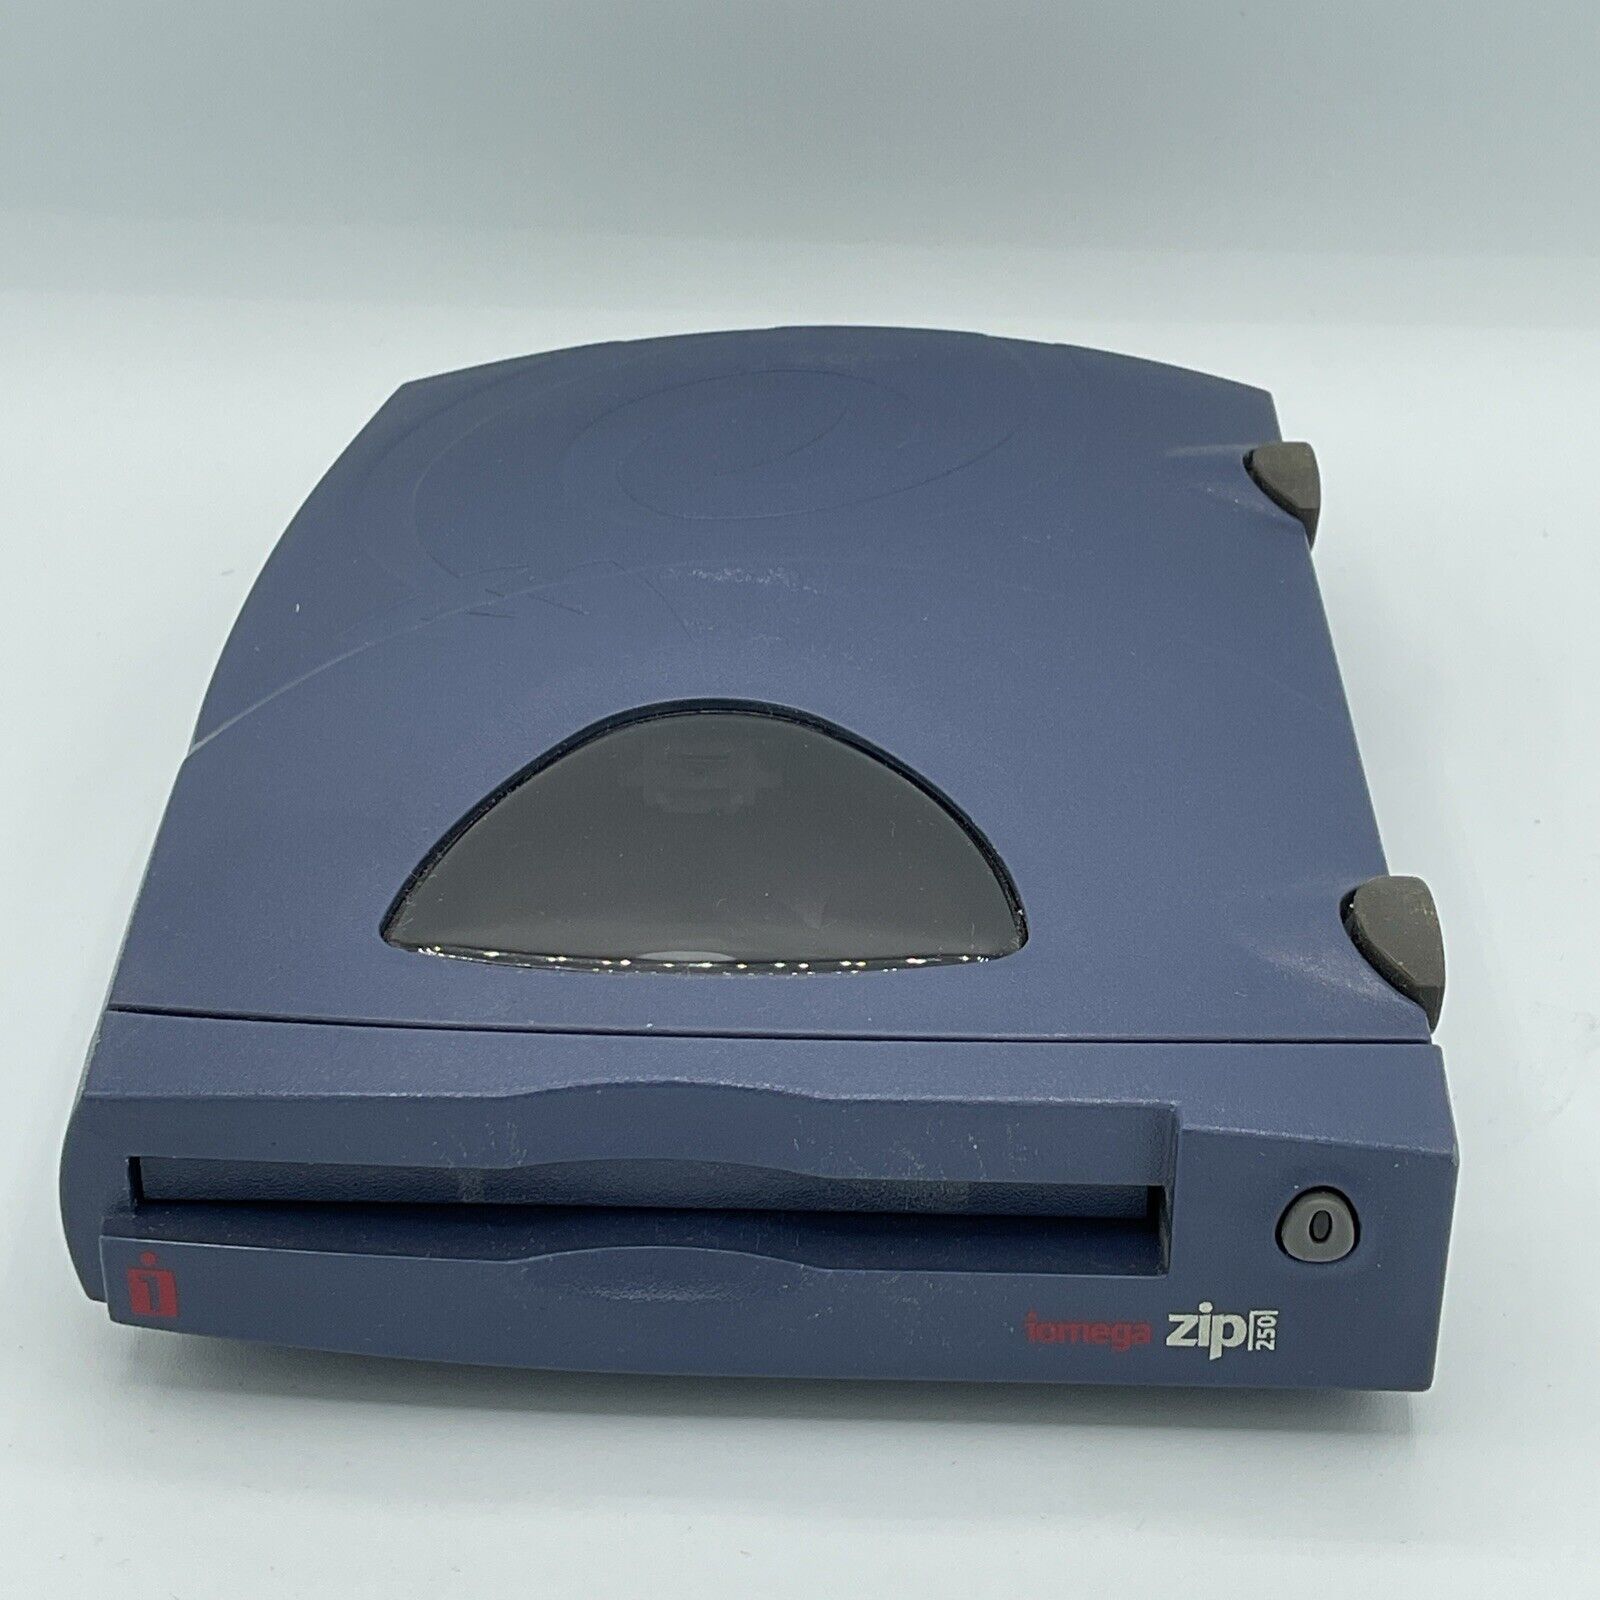 ZIP 250 Iomega Drive External Z250P Mac PC Windows OS SCSI Parallel Disk 250MB